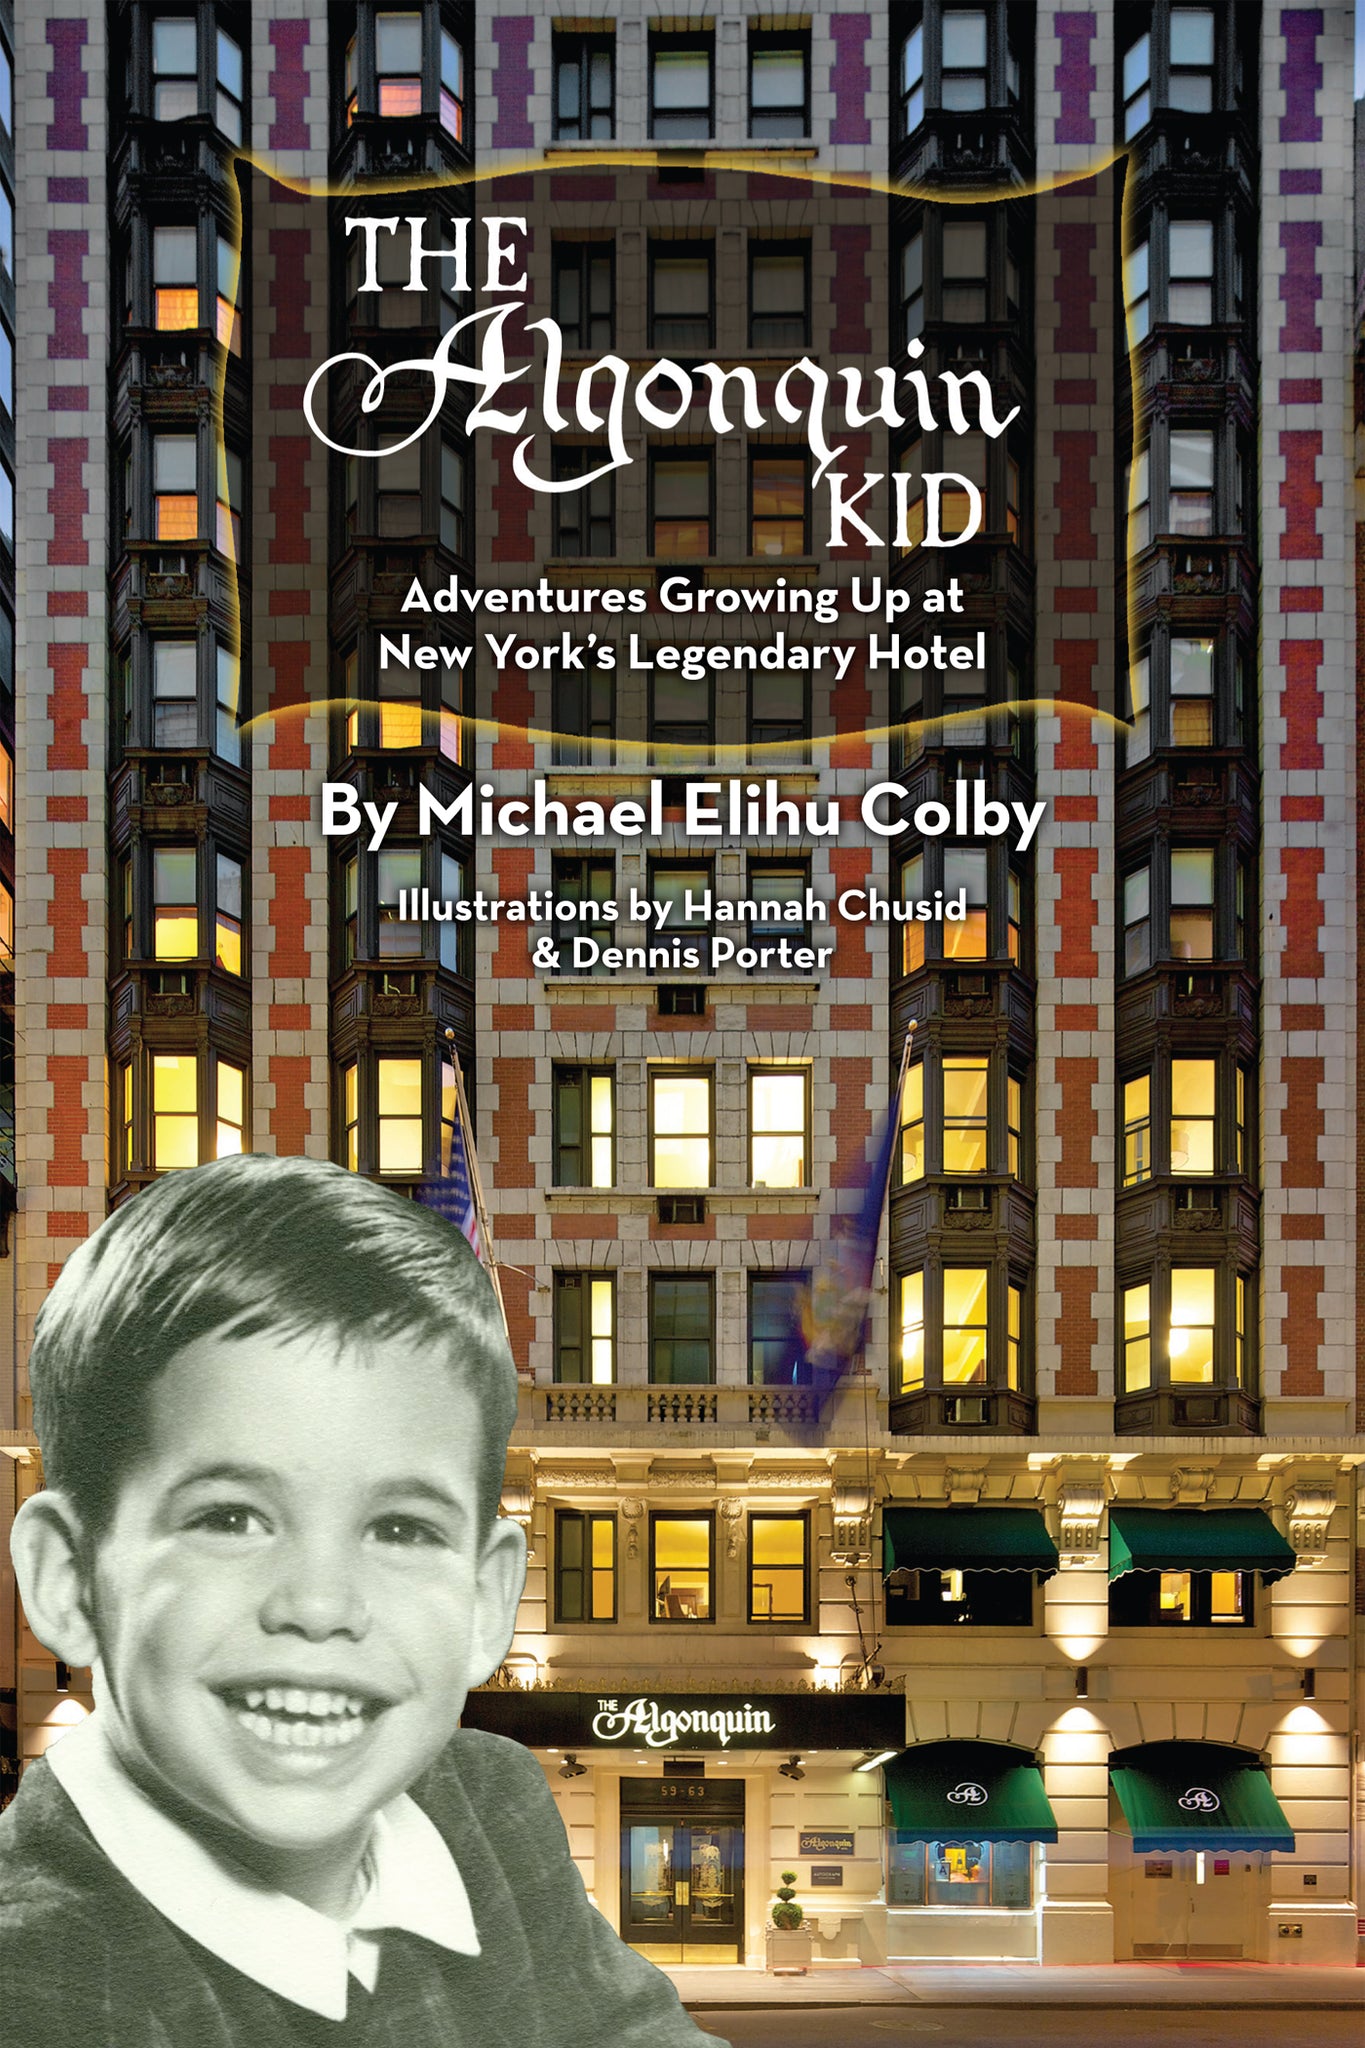 The Algonquin Kid - Adventures Growing Up at New York's Legendary Hotel (ebook) - BearManor Manor